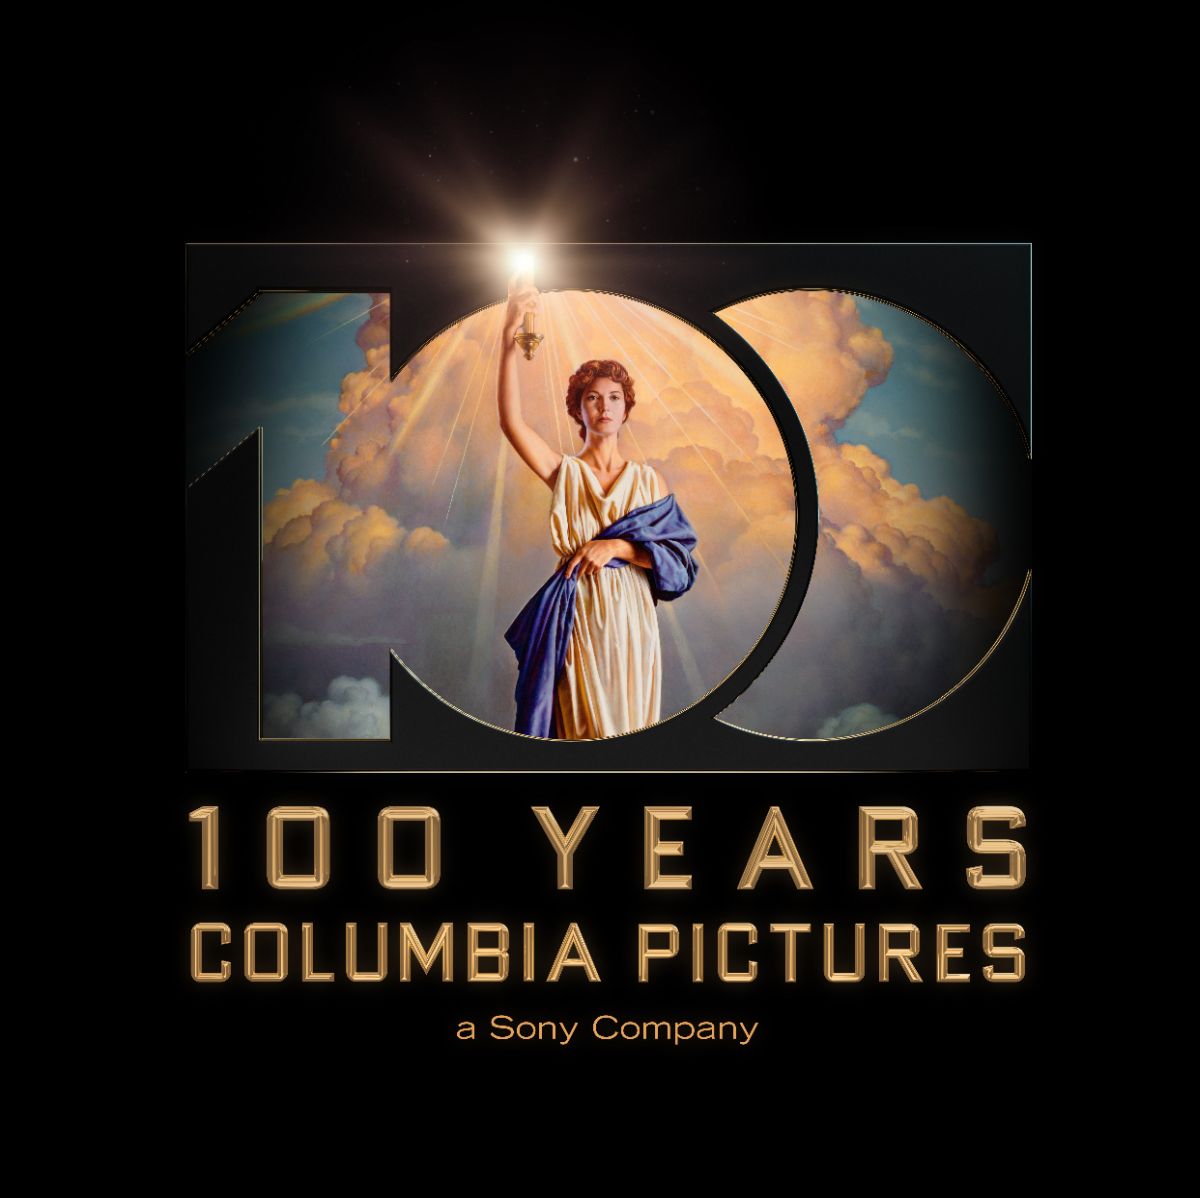 Columbia Pictures: ‘Εγινε 100 χρονών και άλλαξε λογότυπο!